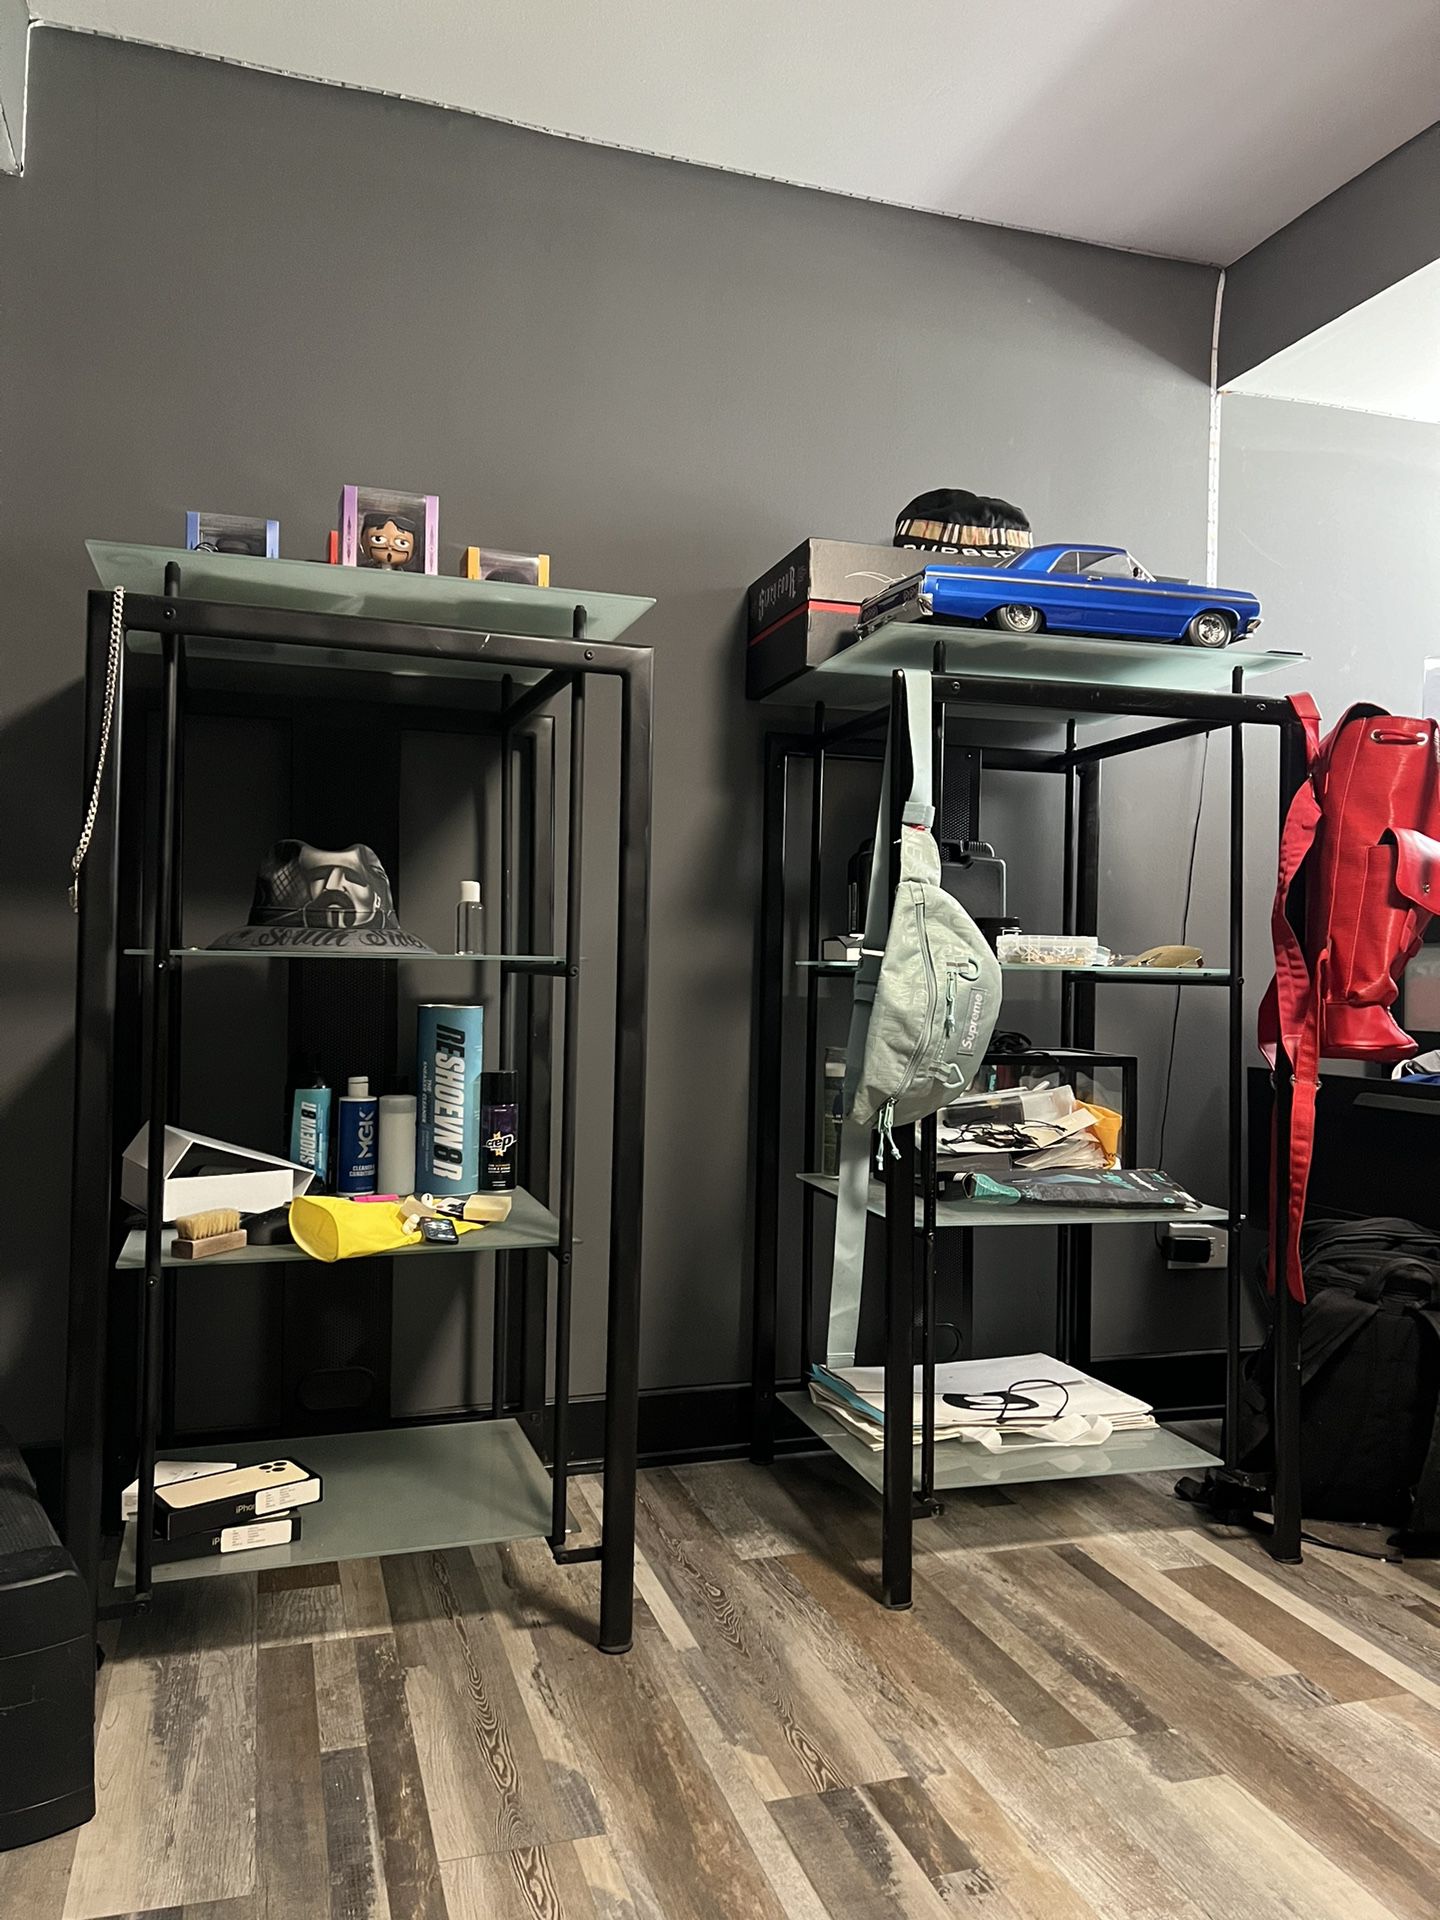 Shelf / Rack / Room Decor